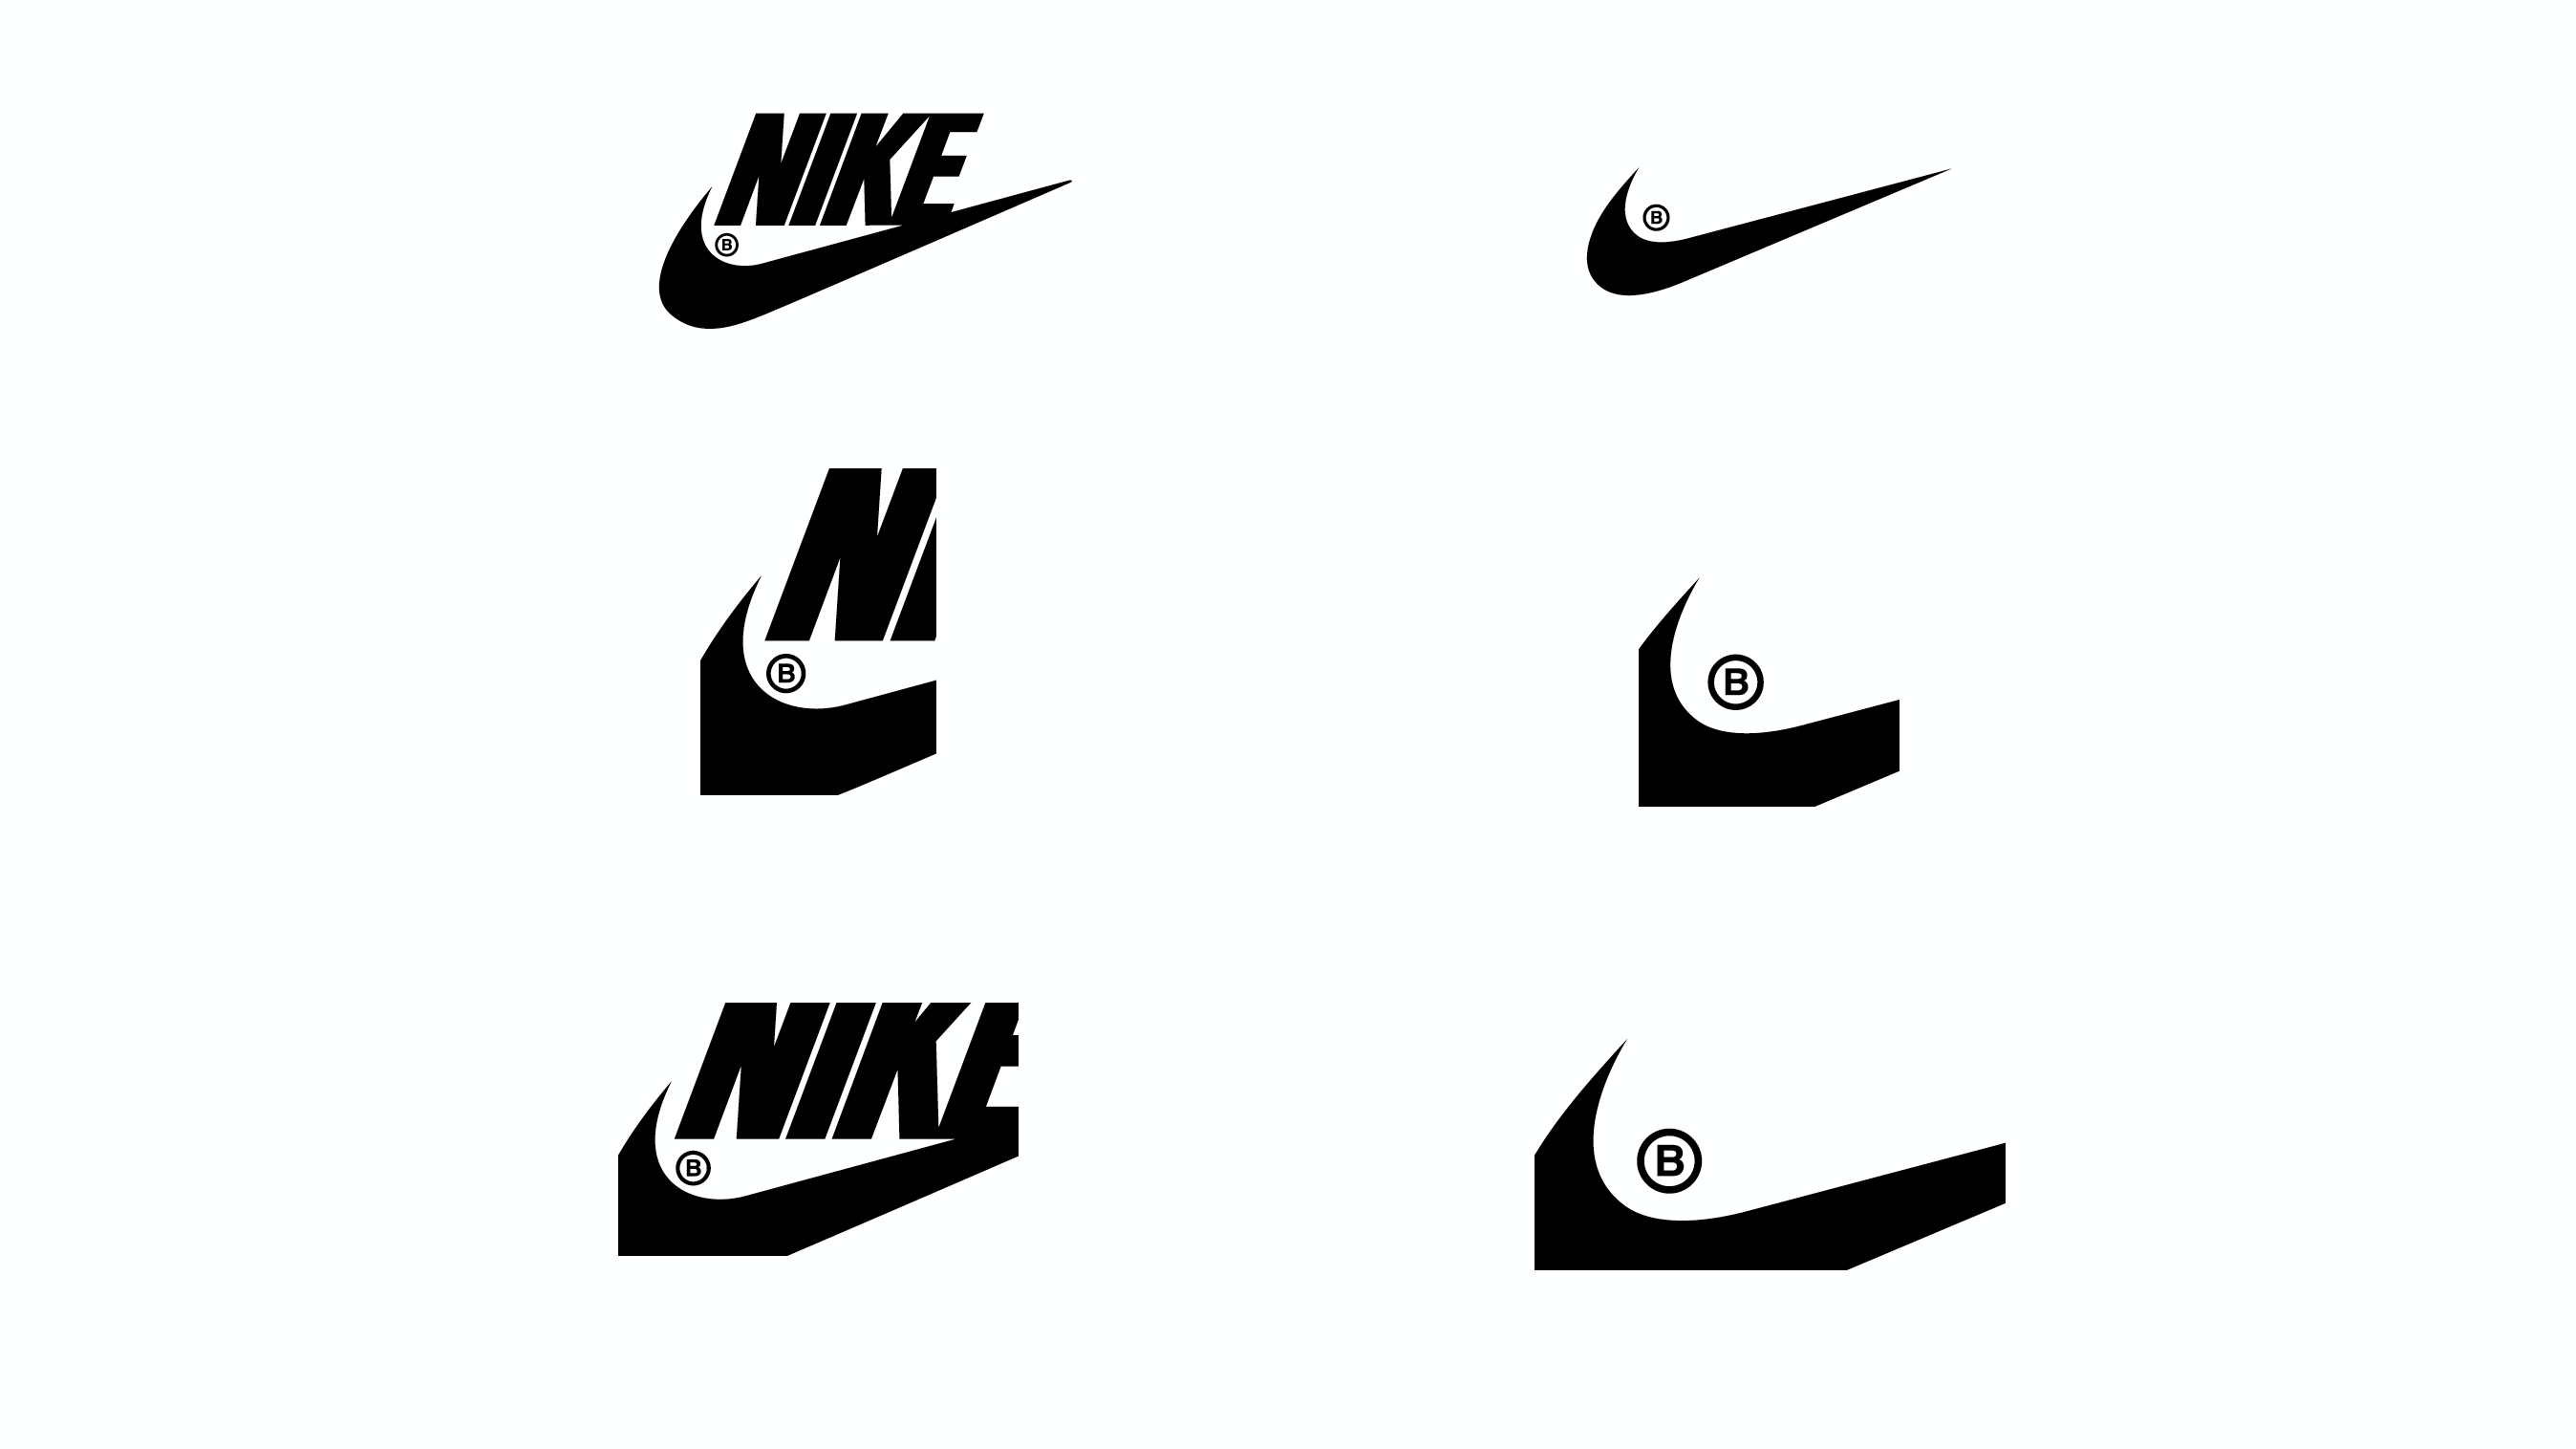 Openly Petulance lightly Nike 2018 / Basketball / Branding - Design